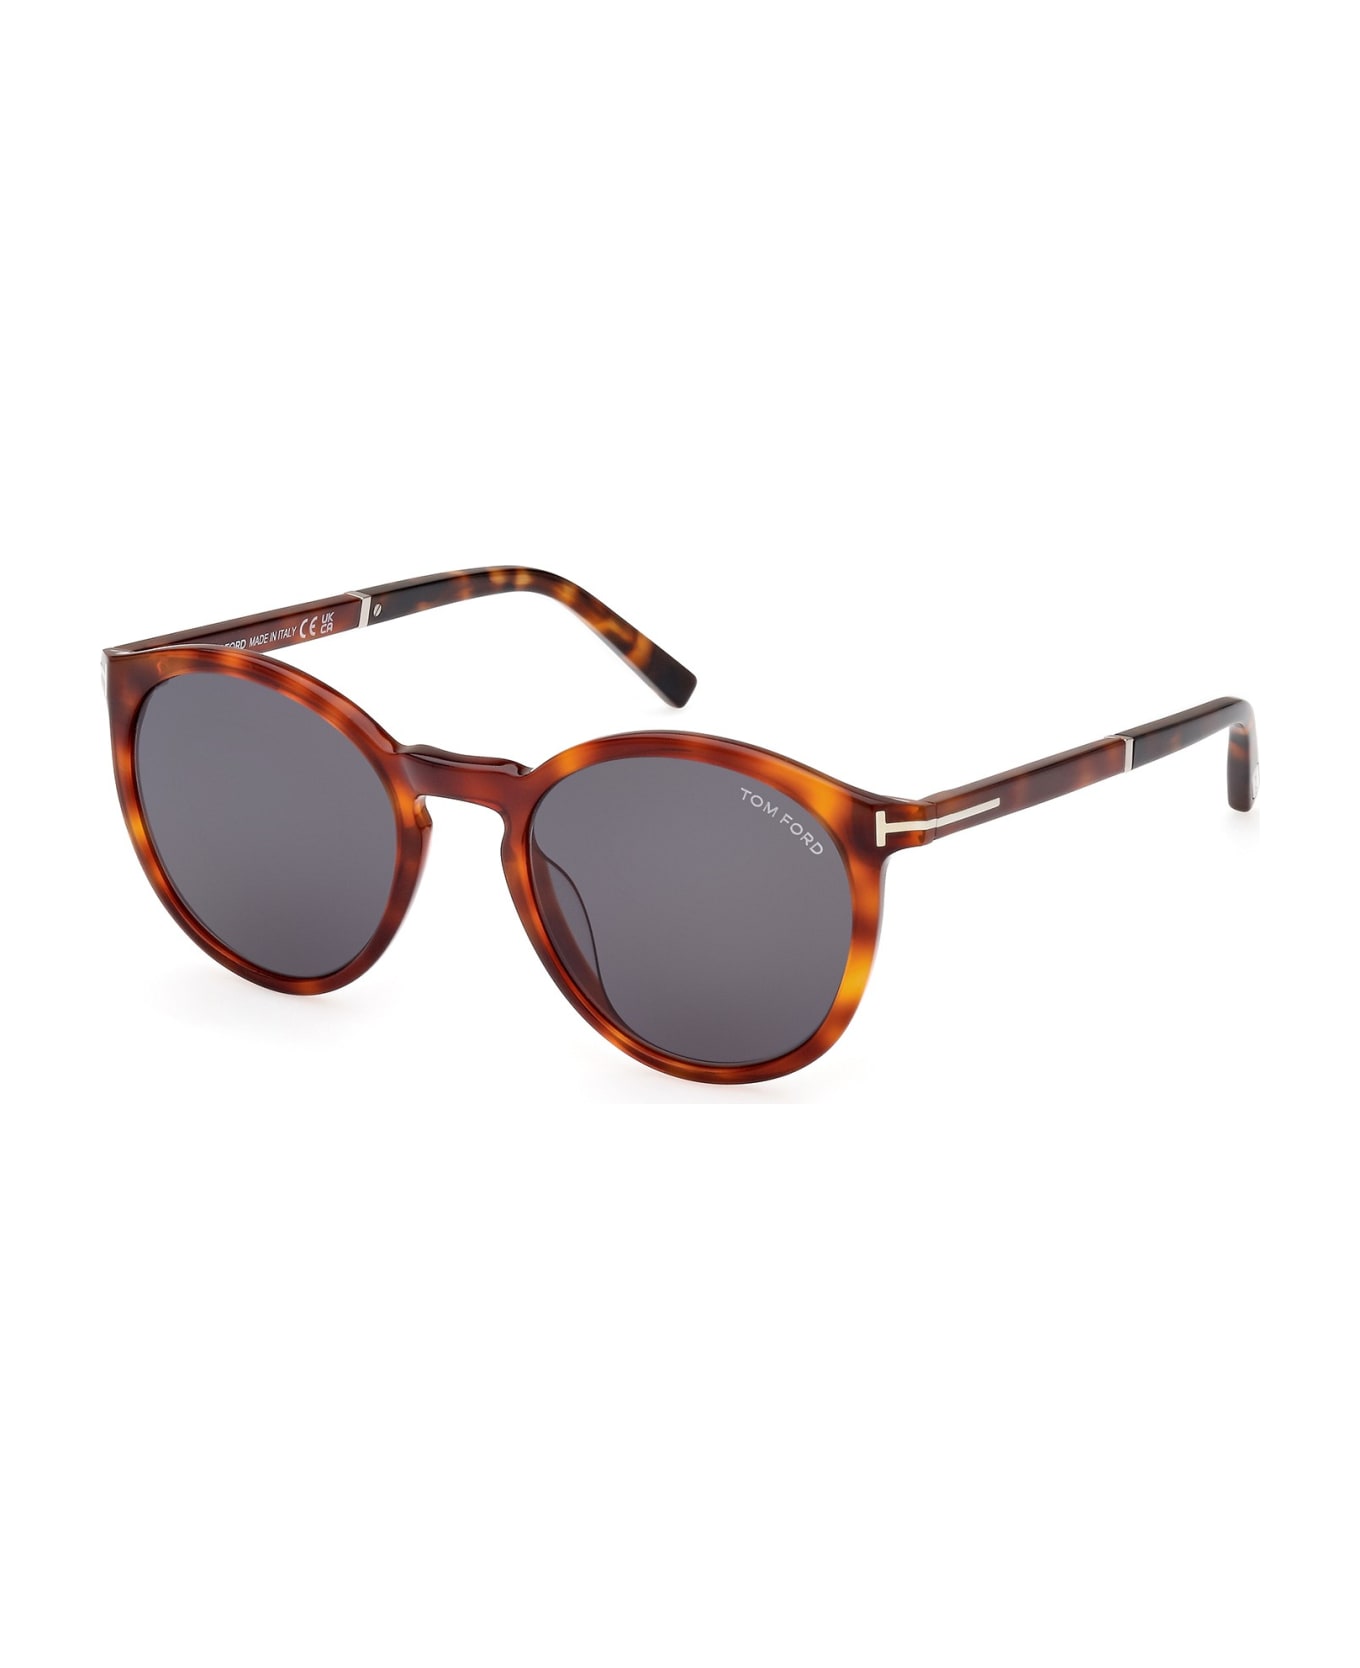 Tom Ford Eyewear Sunglasses - Marrone/Marrone